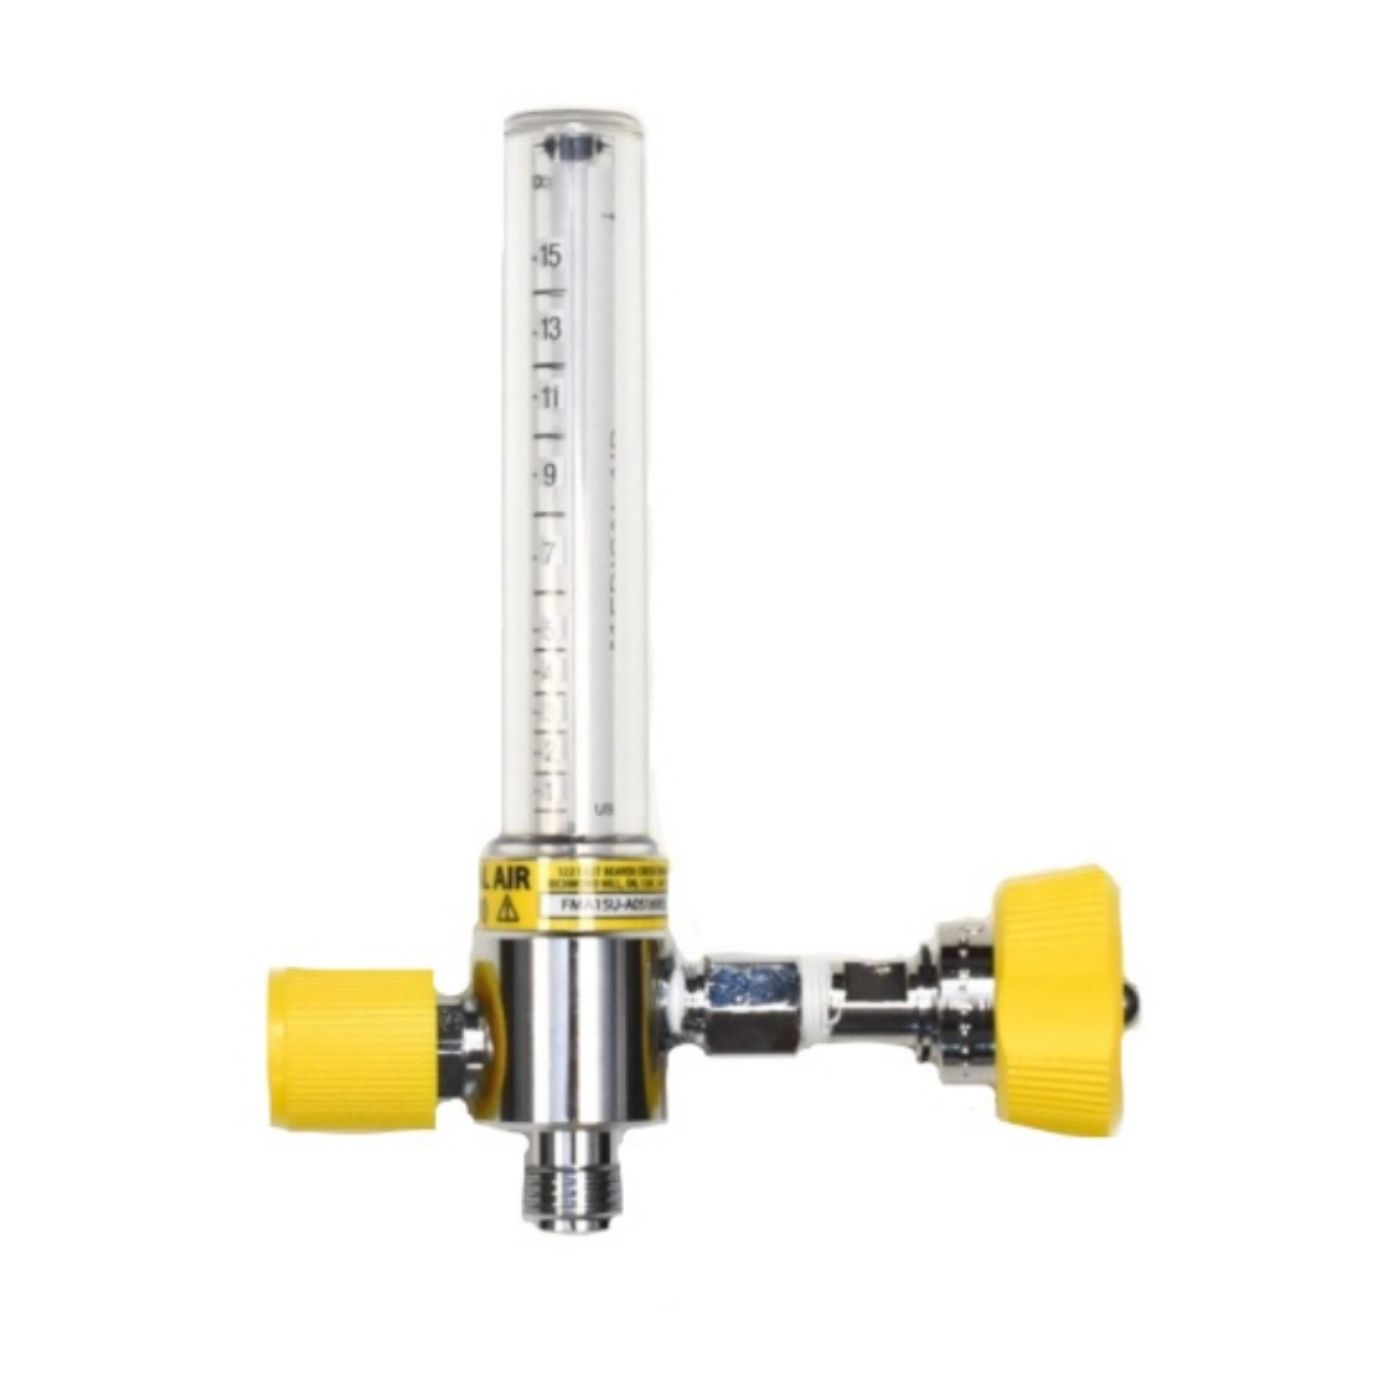 Flowmeter air vw - low price ❱ XDALYS